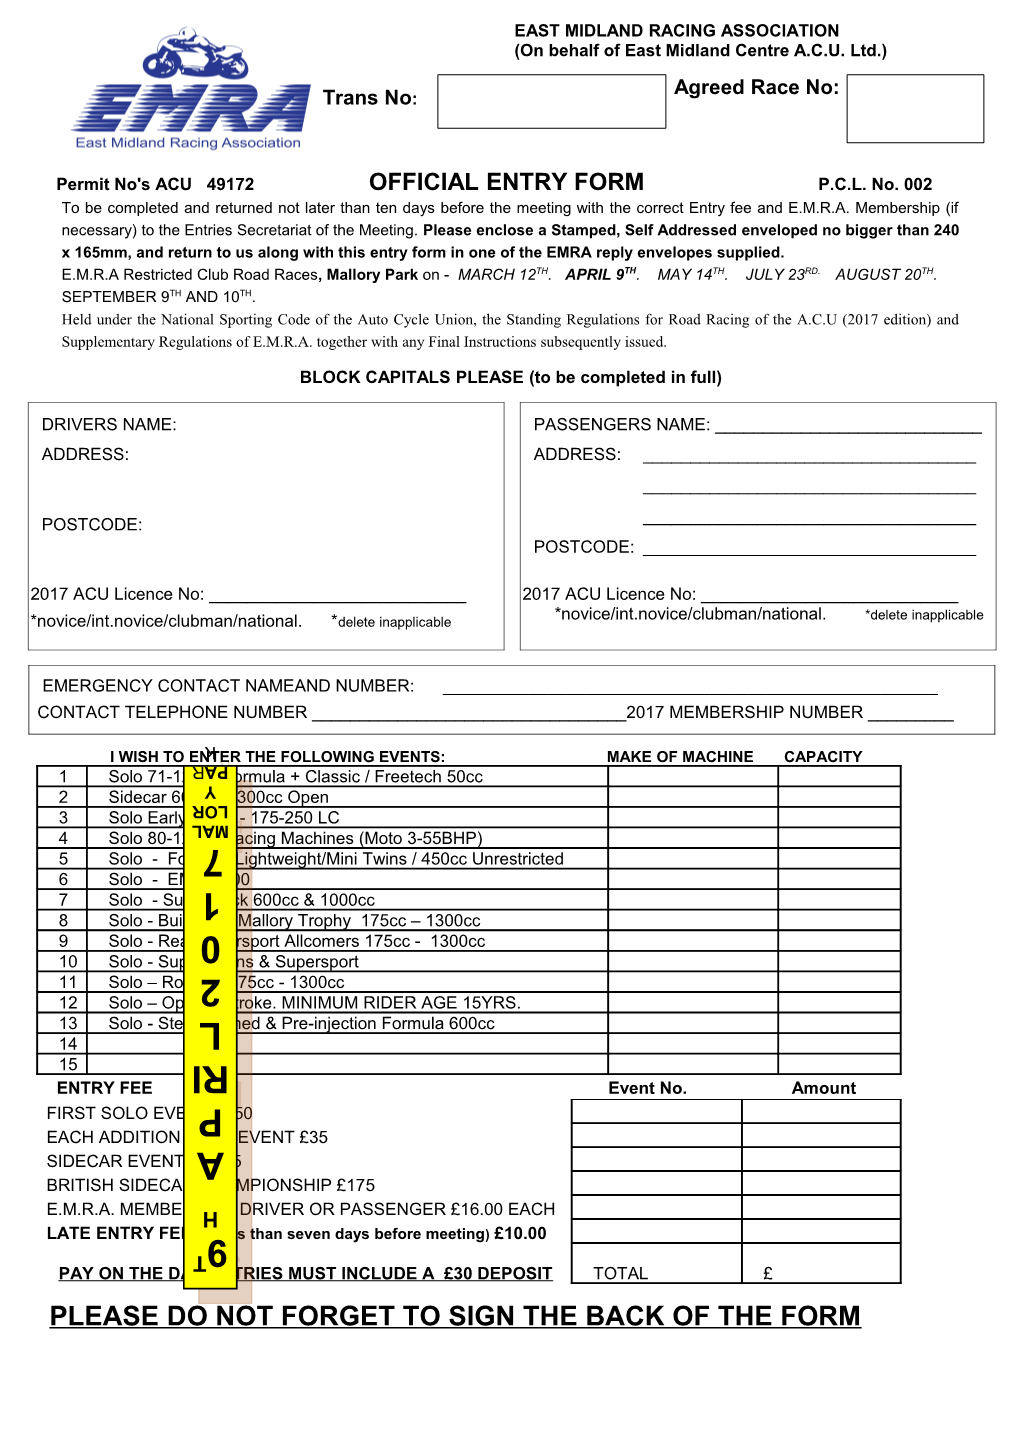 Permit No's ACU 49172 OFFICIAL ENTRY FORM P.C.L. No. 002